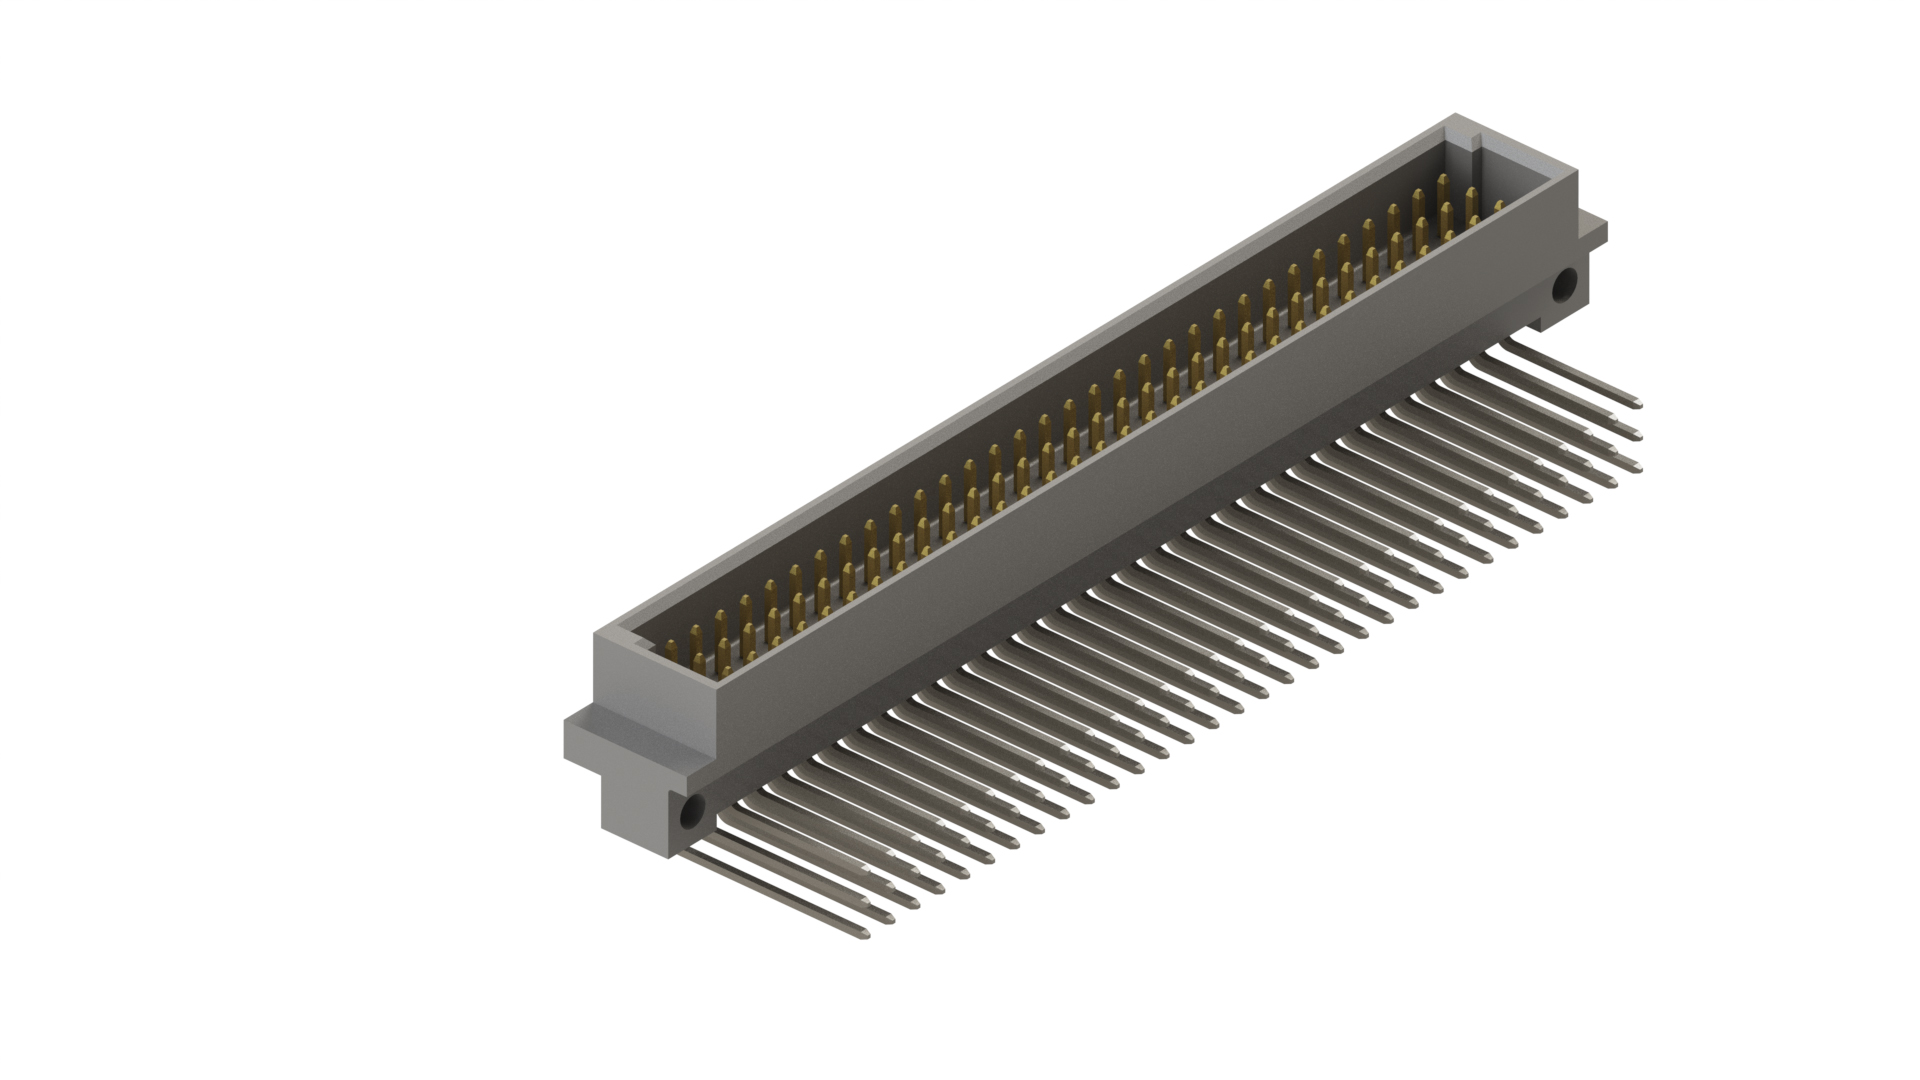 KYOCERA AVX is an industry leader in DIN 41612/VME connectors.